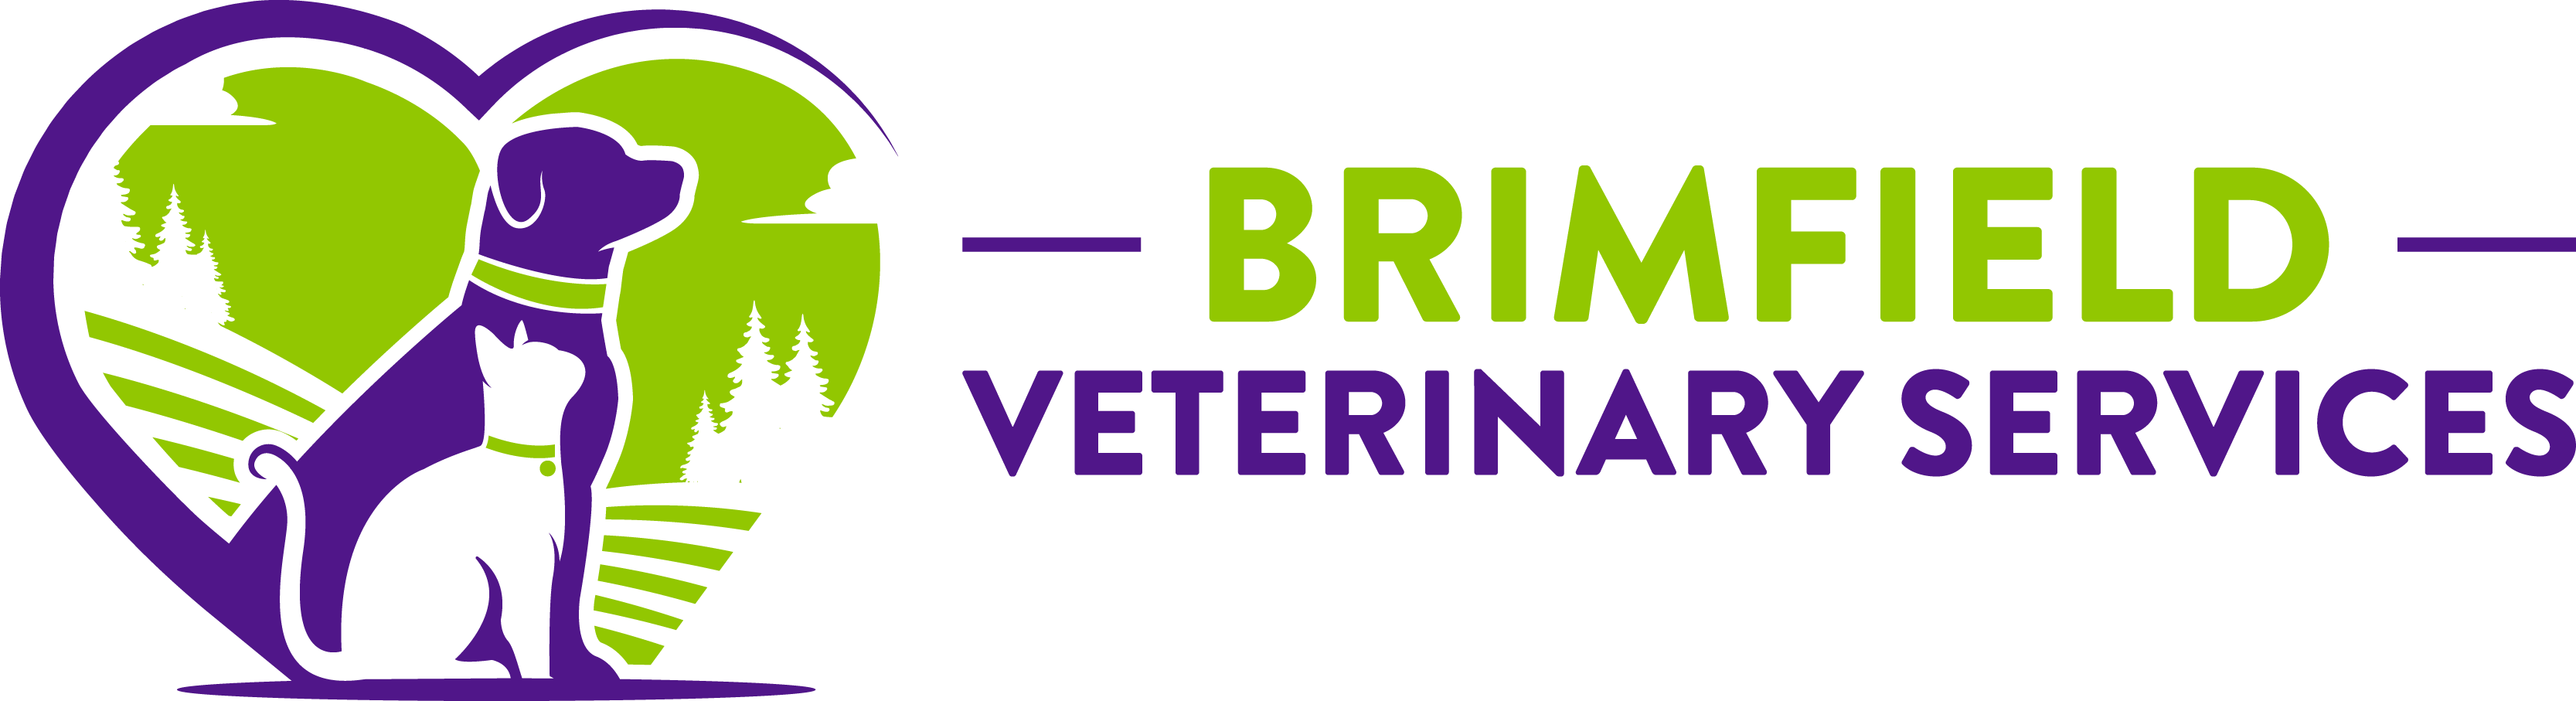 Brimfield Veterinary Services